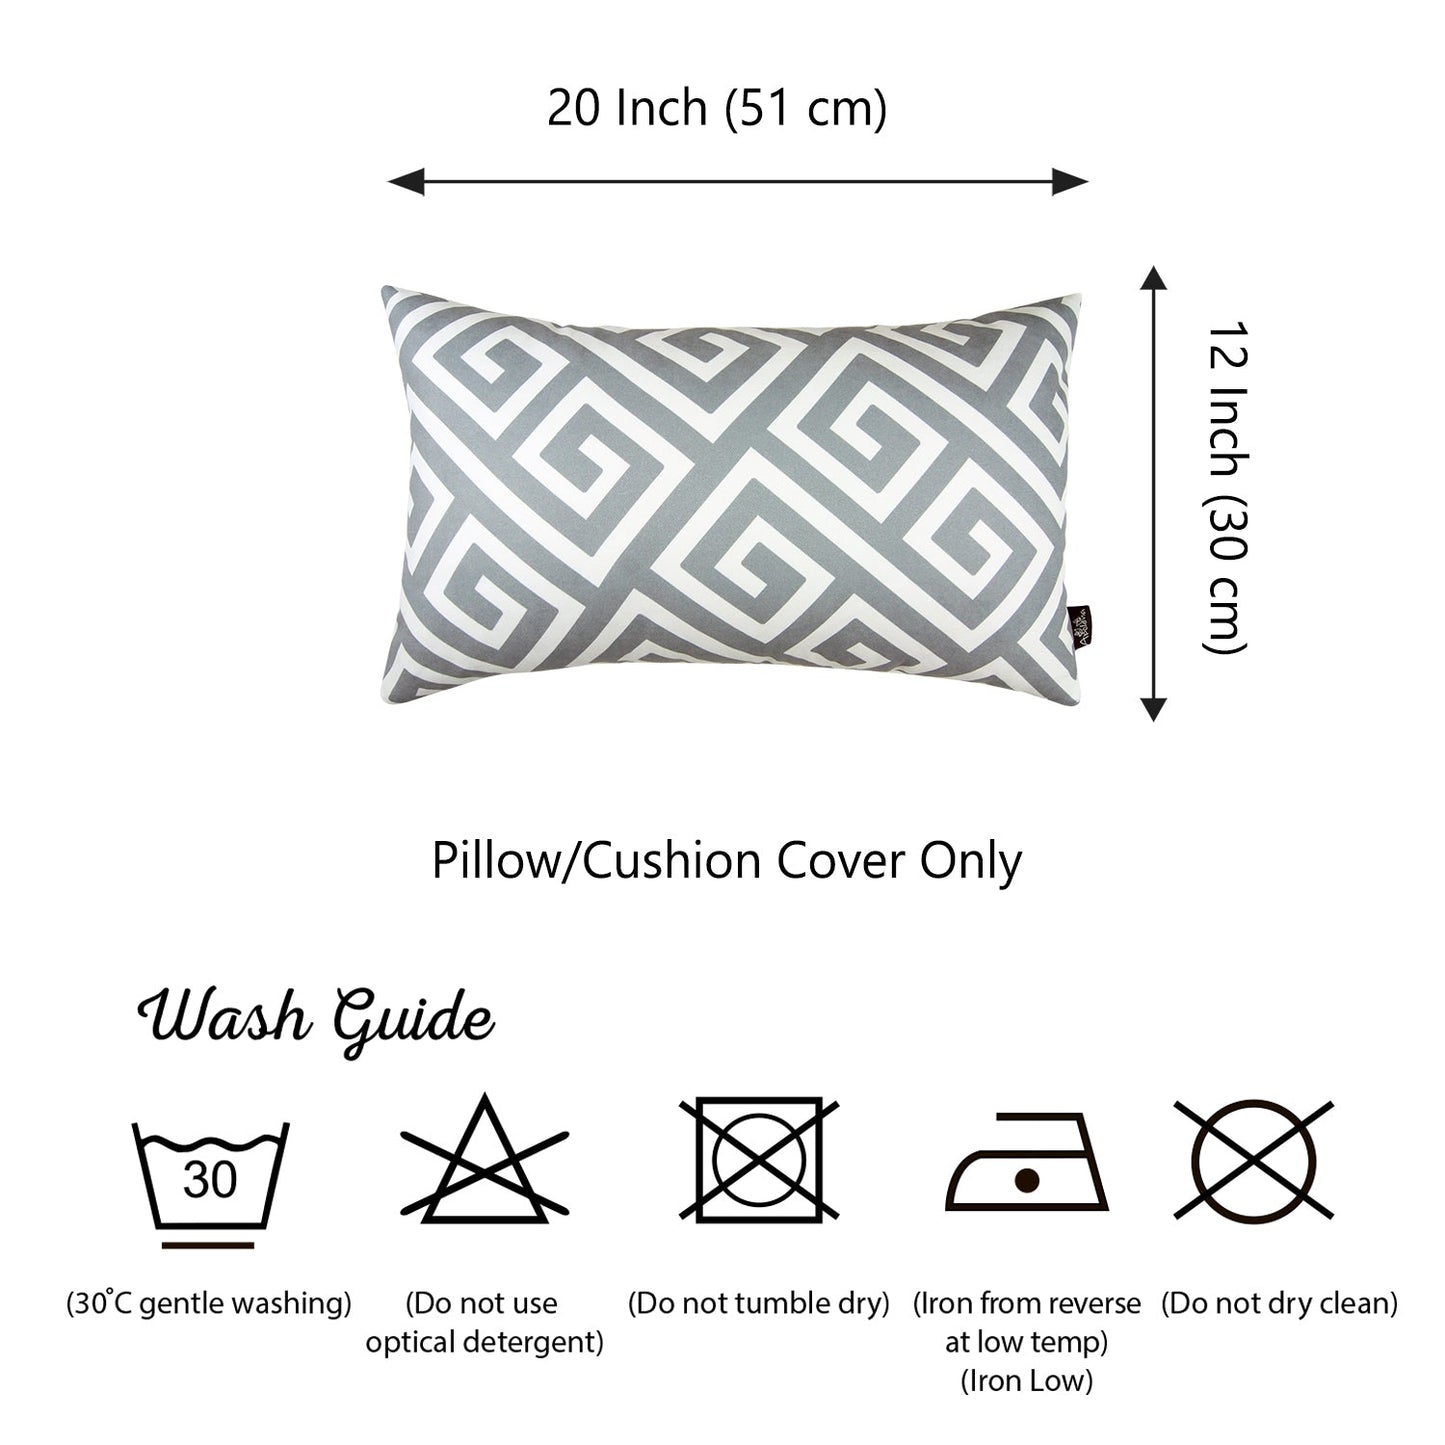 Decorative Throw Pillow Cover Set of 4 Greek Key 12" x 20"